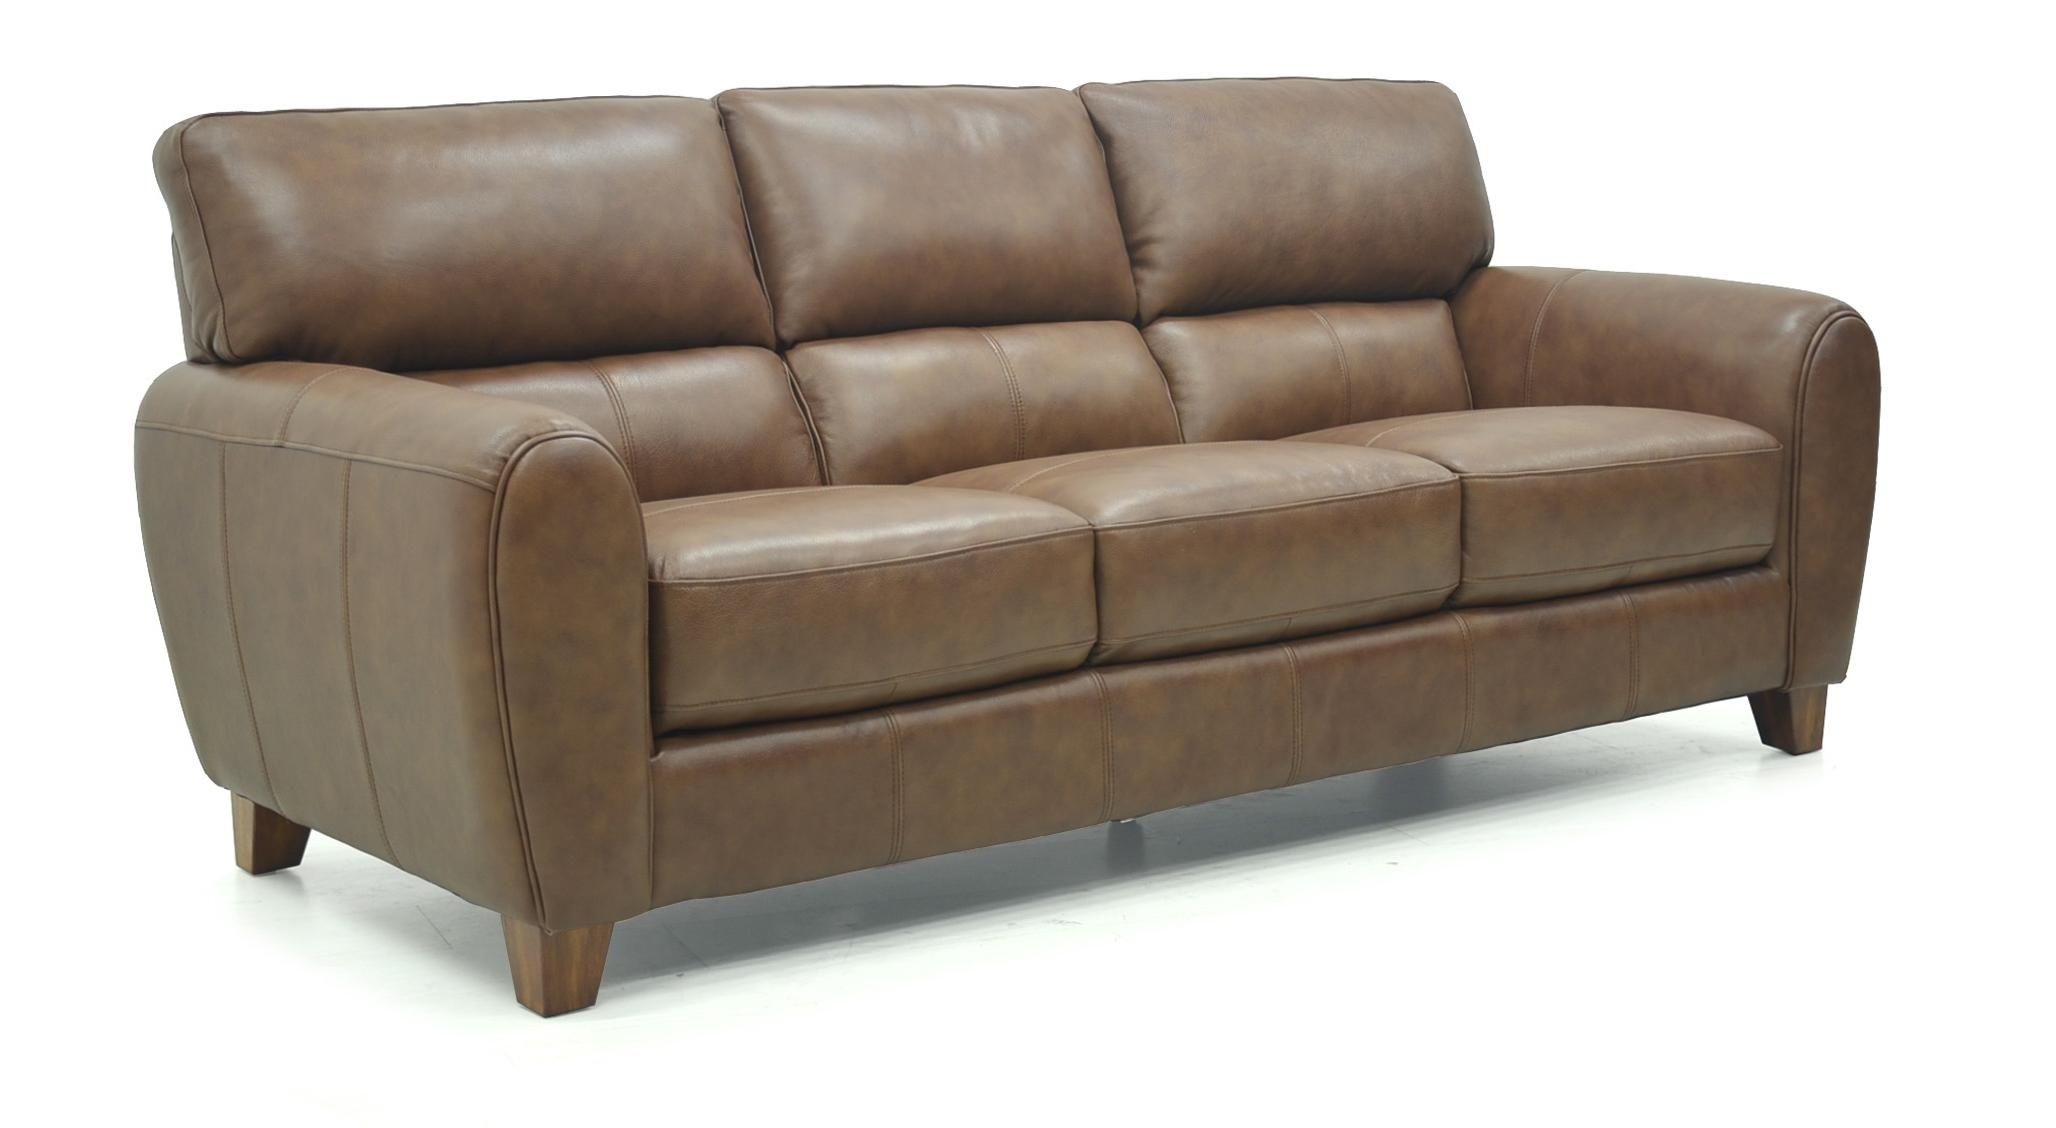 Canterbury Leather Sofa And Chair Range Throughout Canterbury Leather Sofas (View 10 of 20)